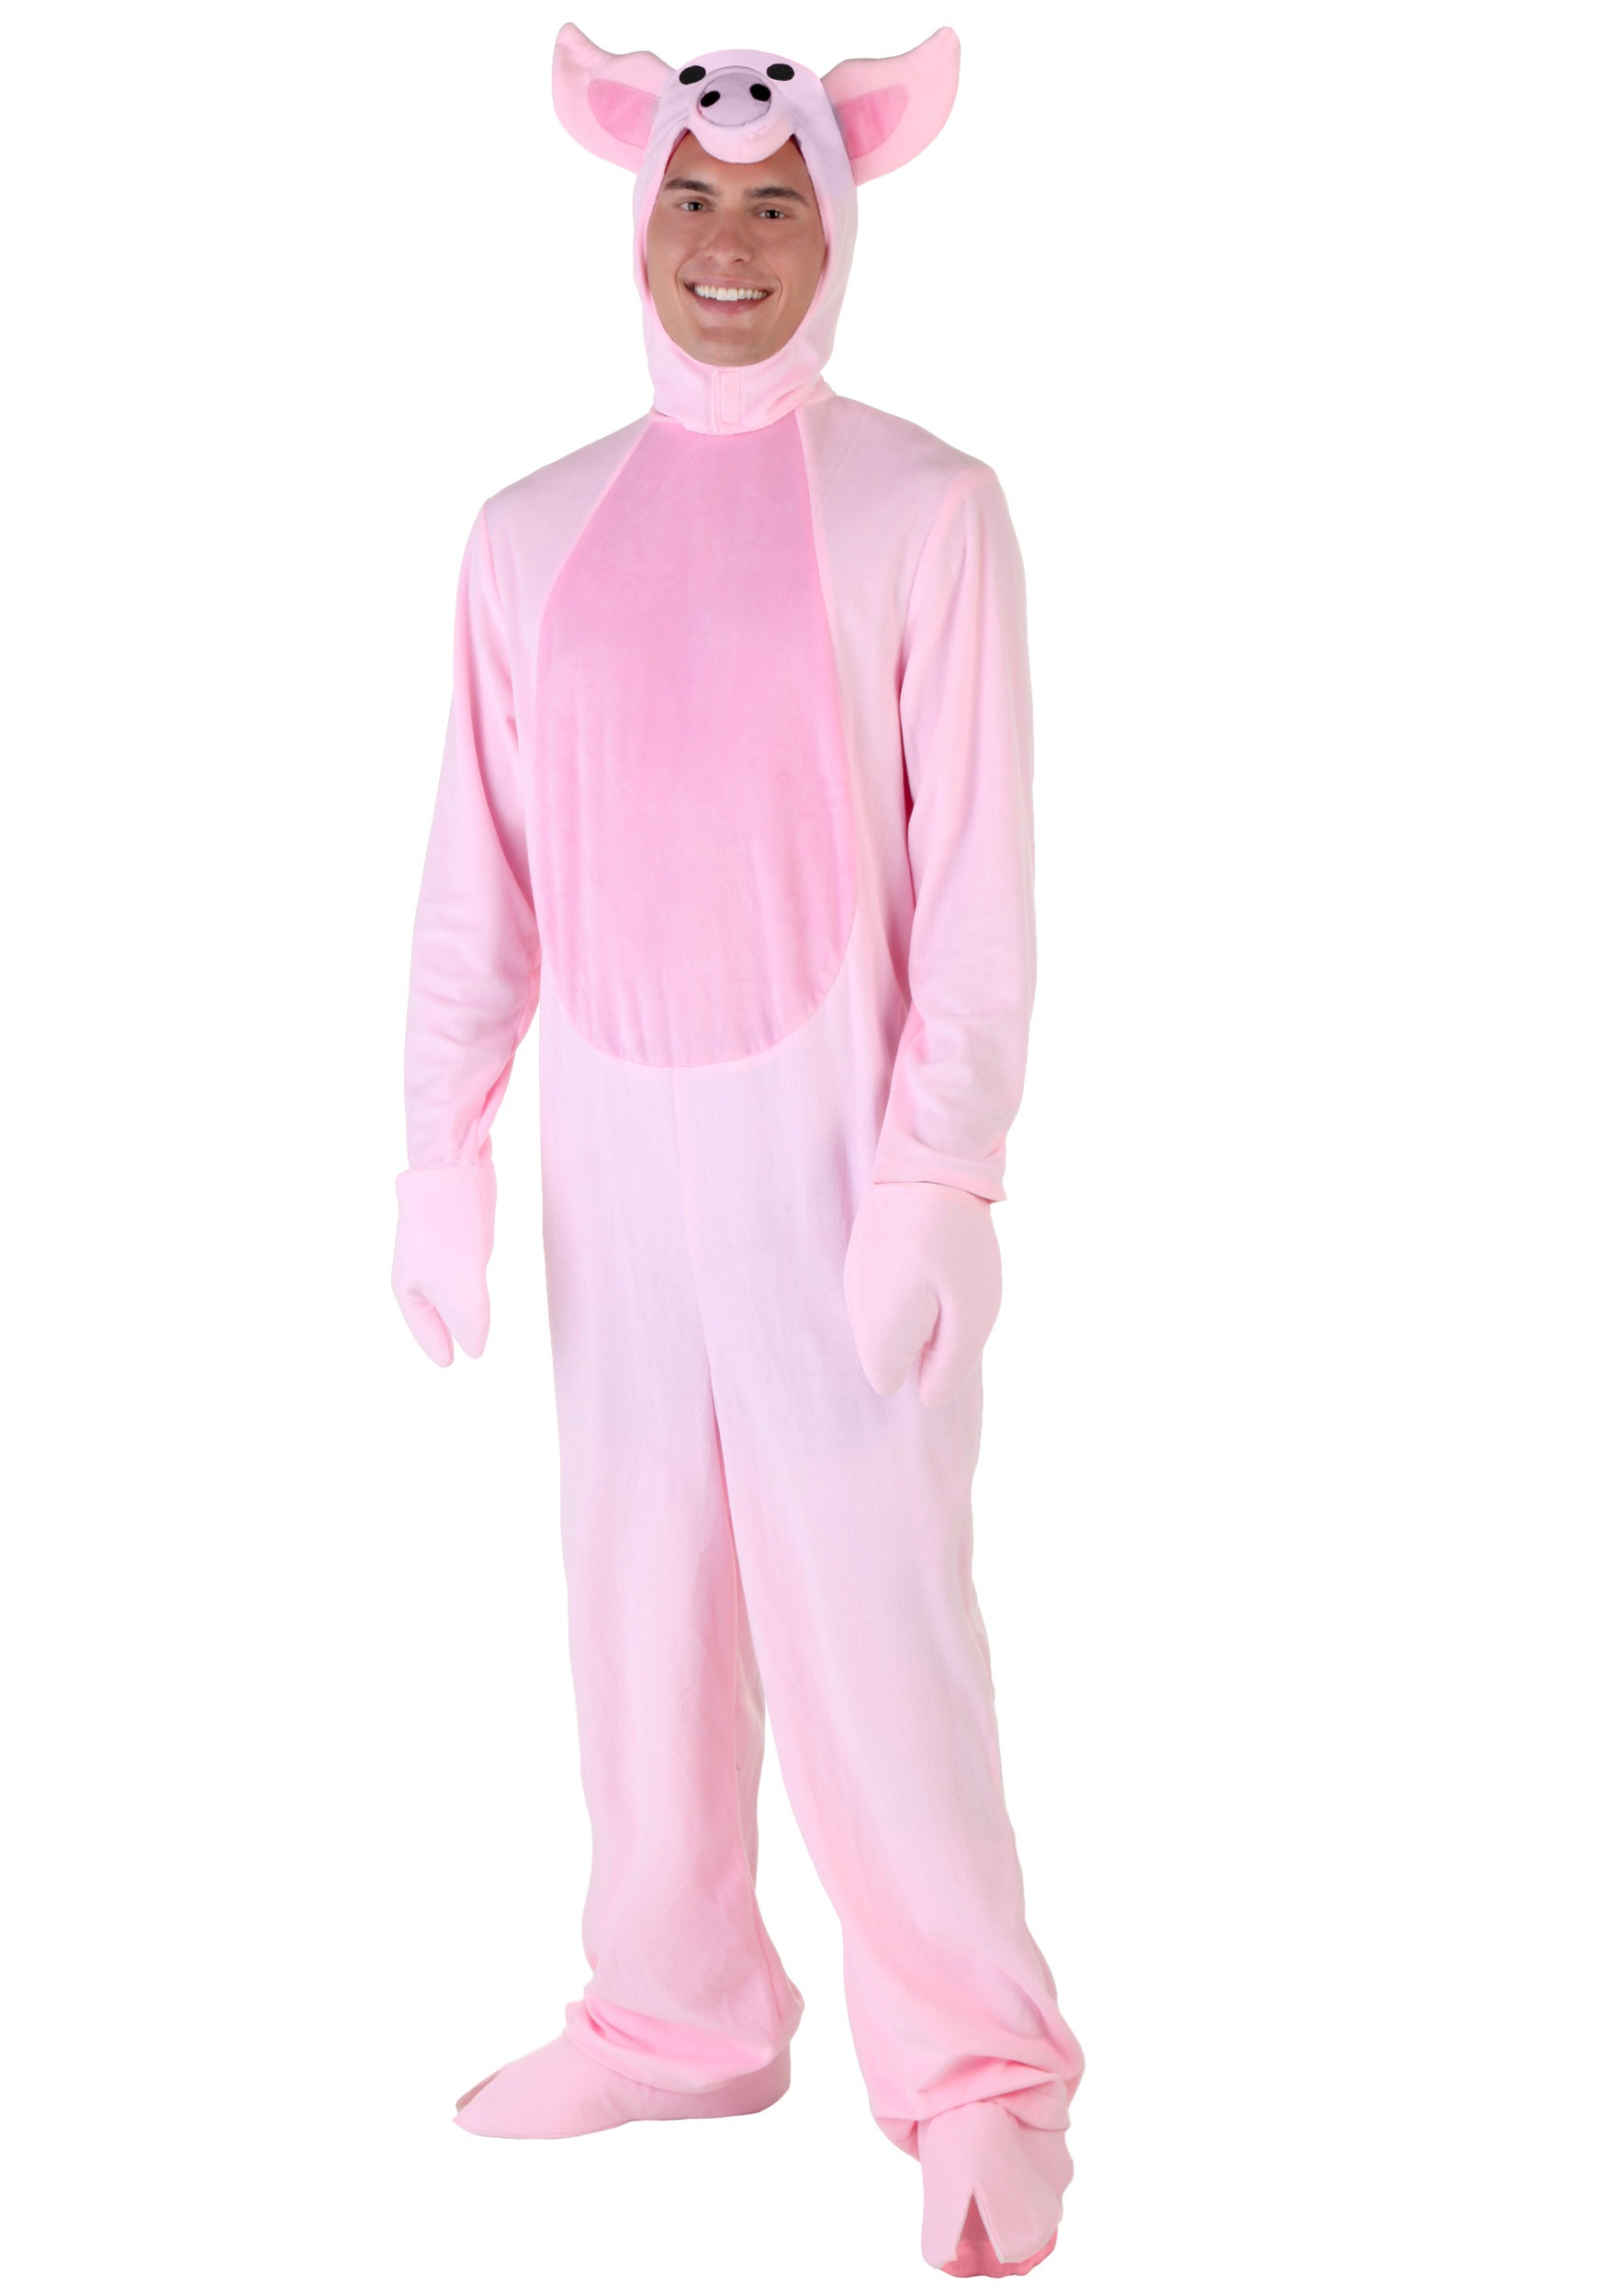 Photos - Fancy Dress FUN Costumes Exclusive Plus Size Pig Costume Pink FUN2224PL